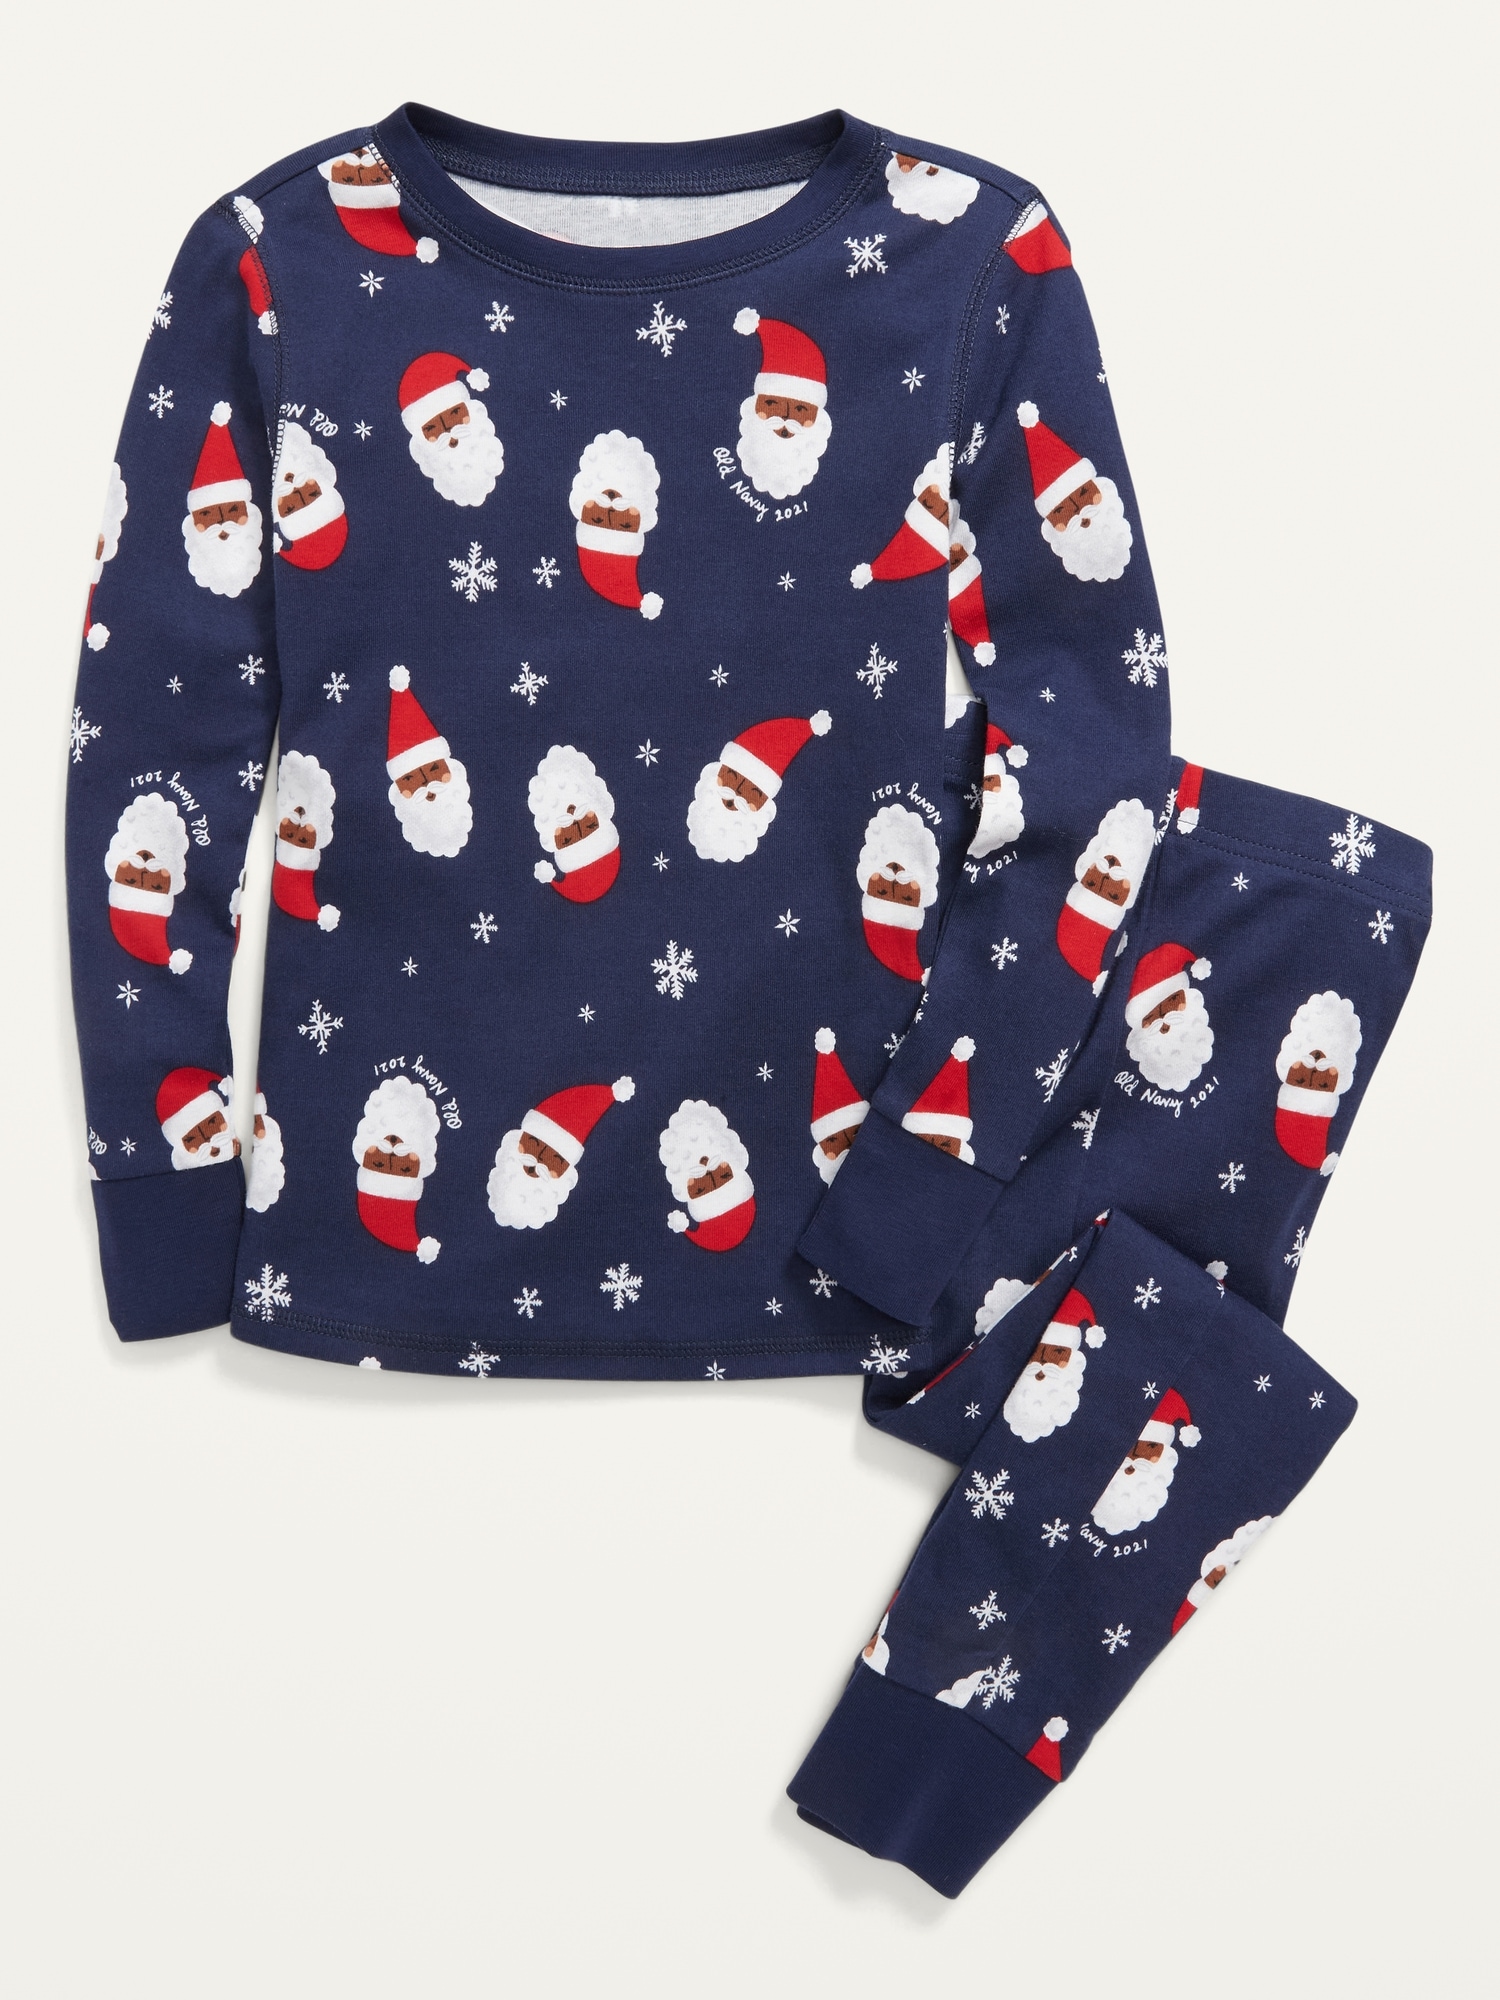 Gender Neutral Matching Santa Claus Snug Fit Pajama Set For Kids Old Navy